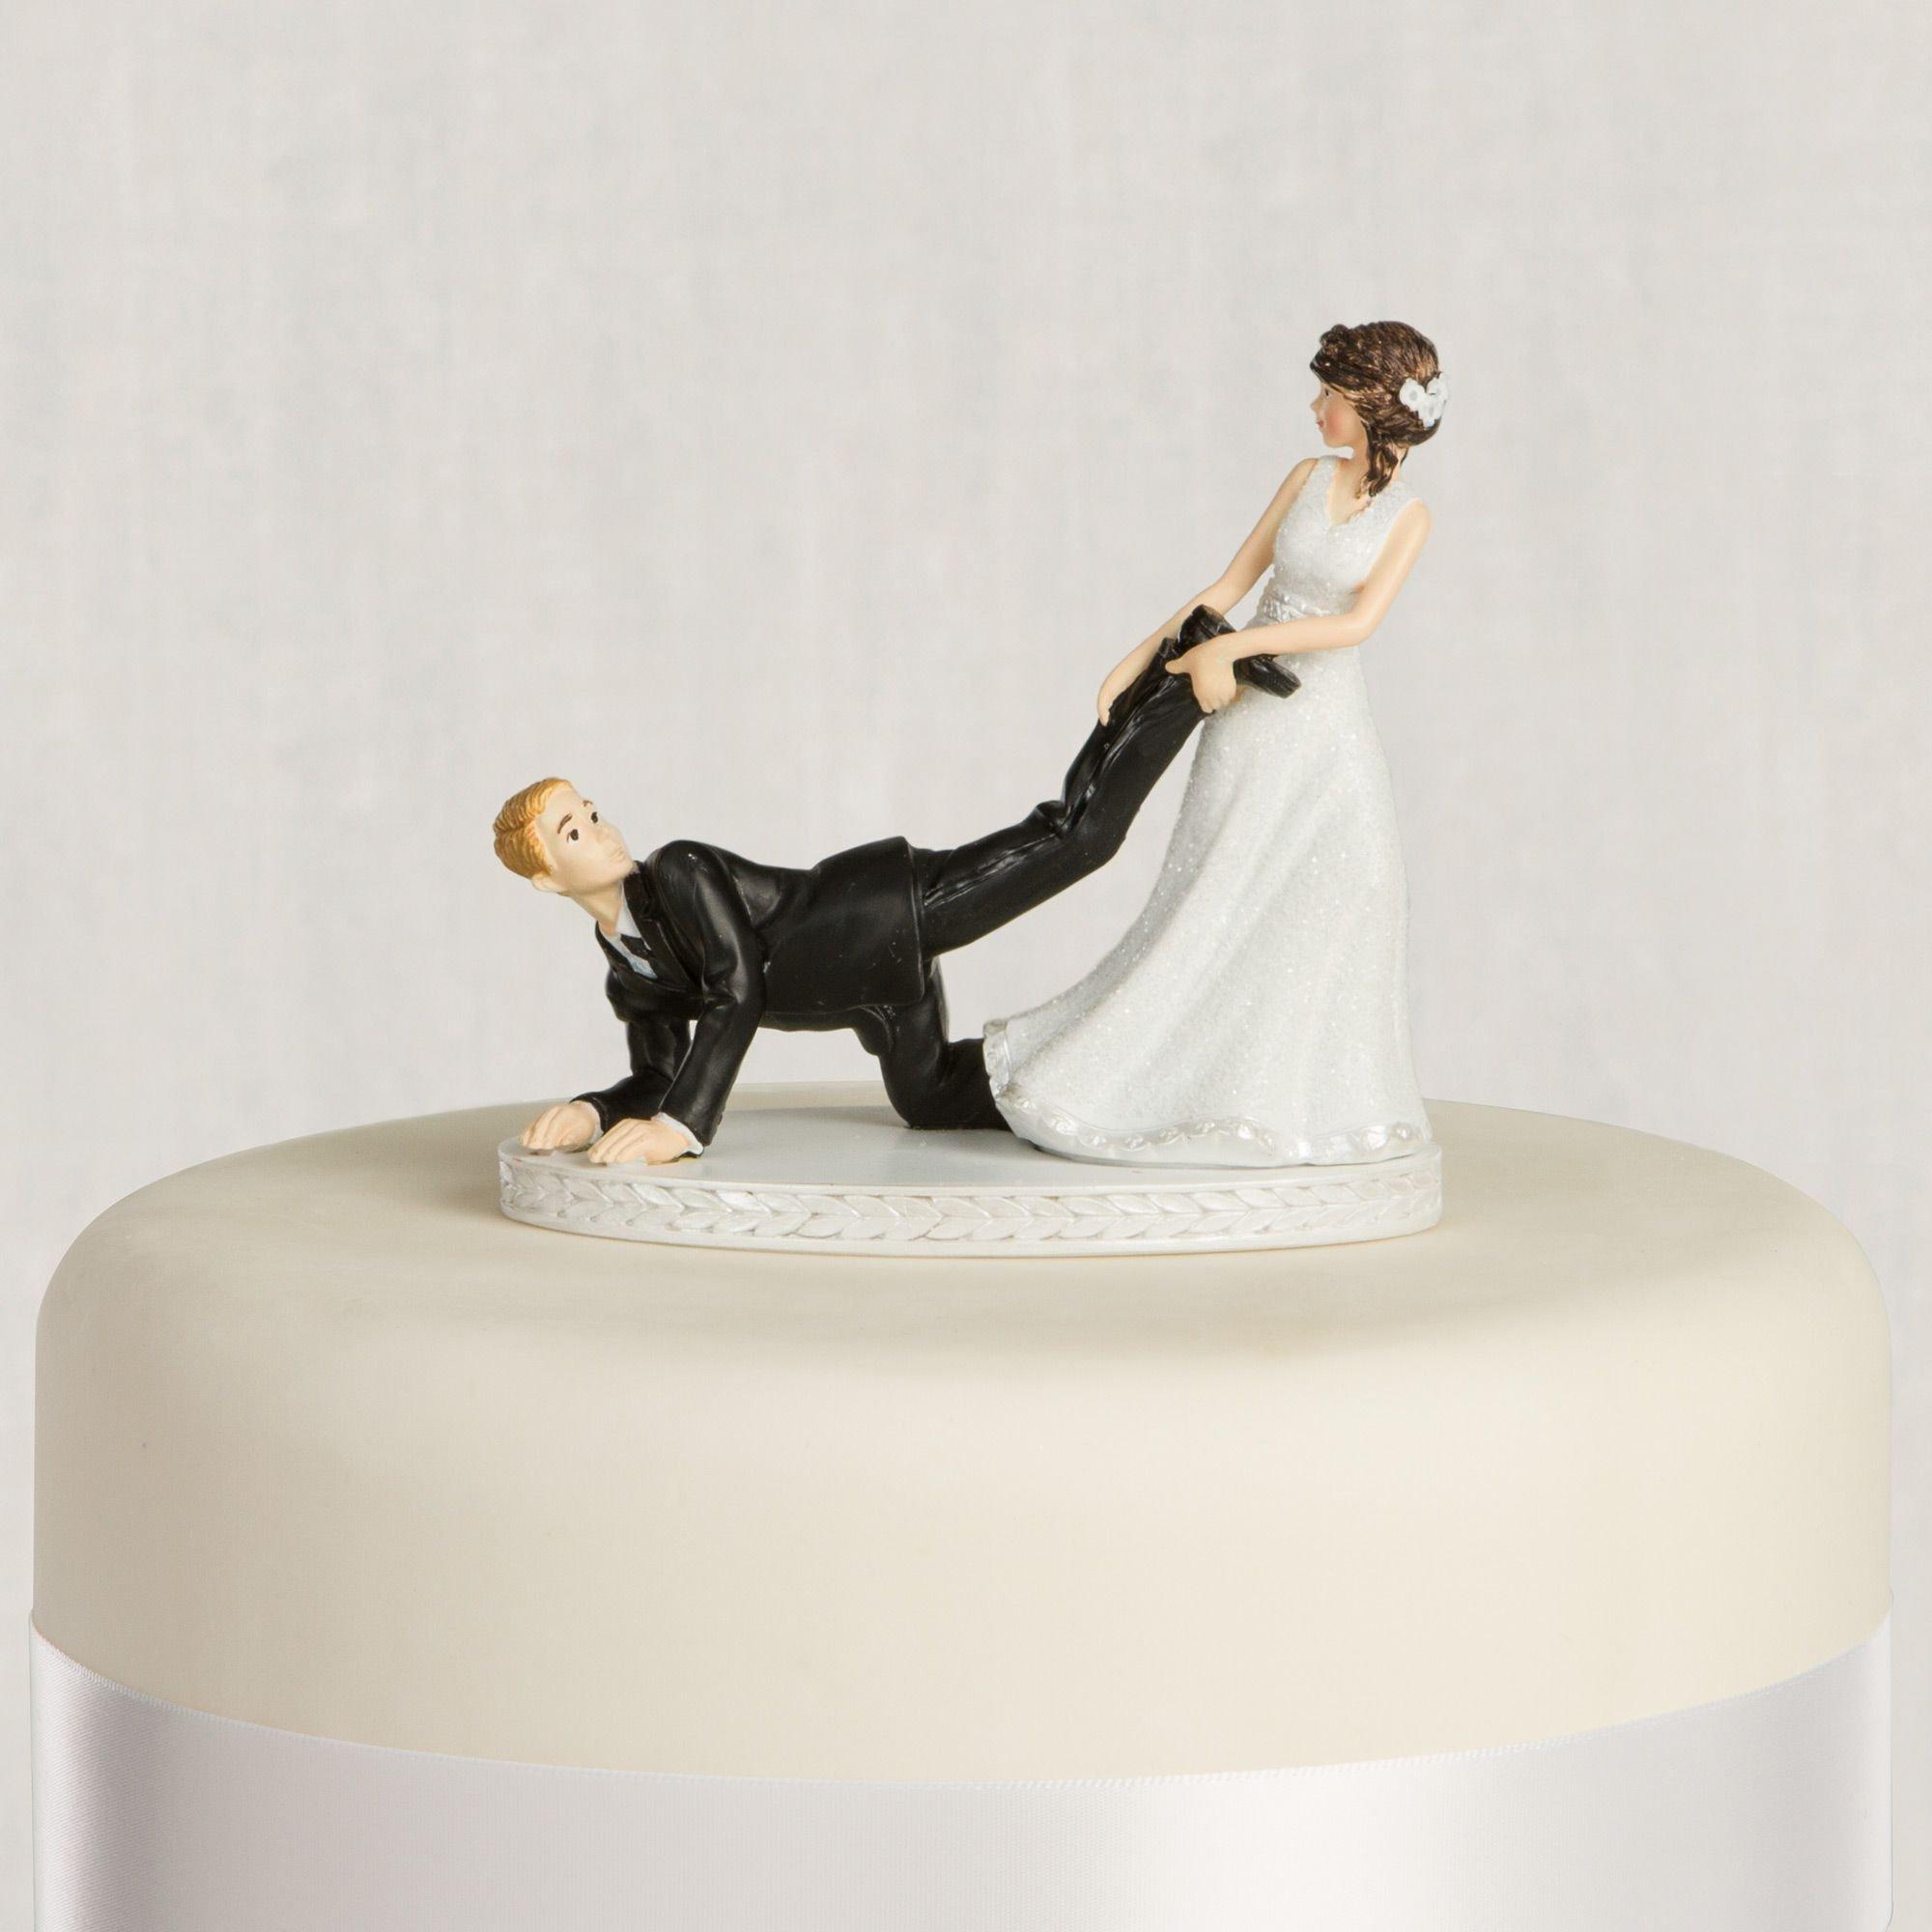 Leg Puller Bride & Groom Wedding Cake Topper 4in | Party City